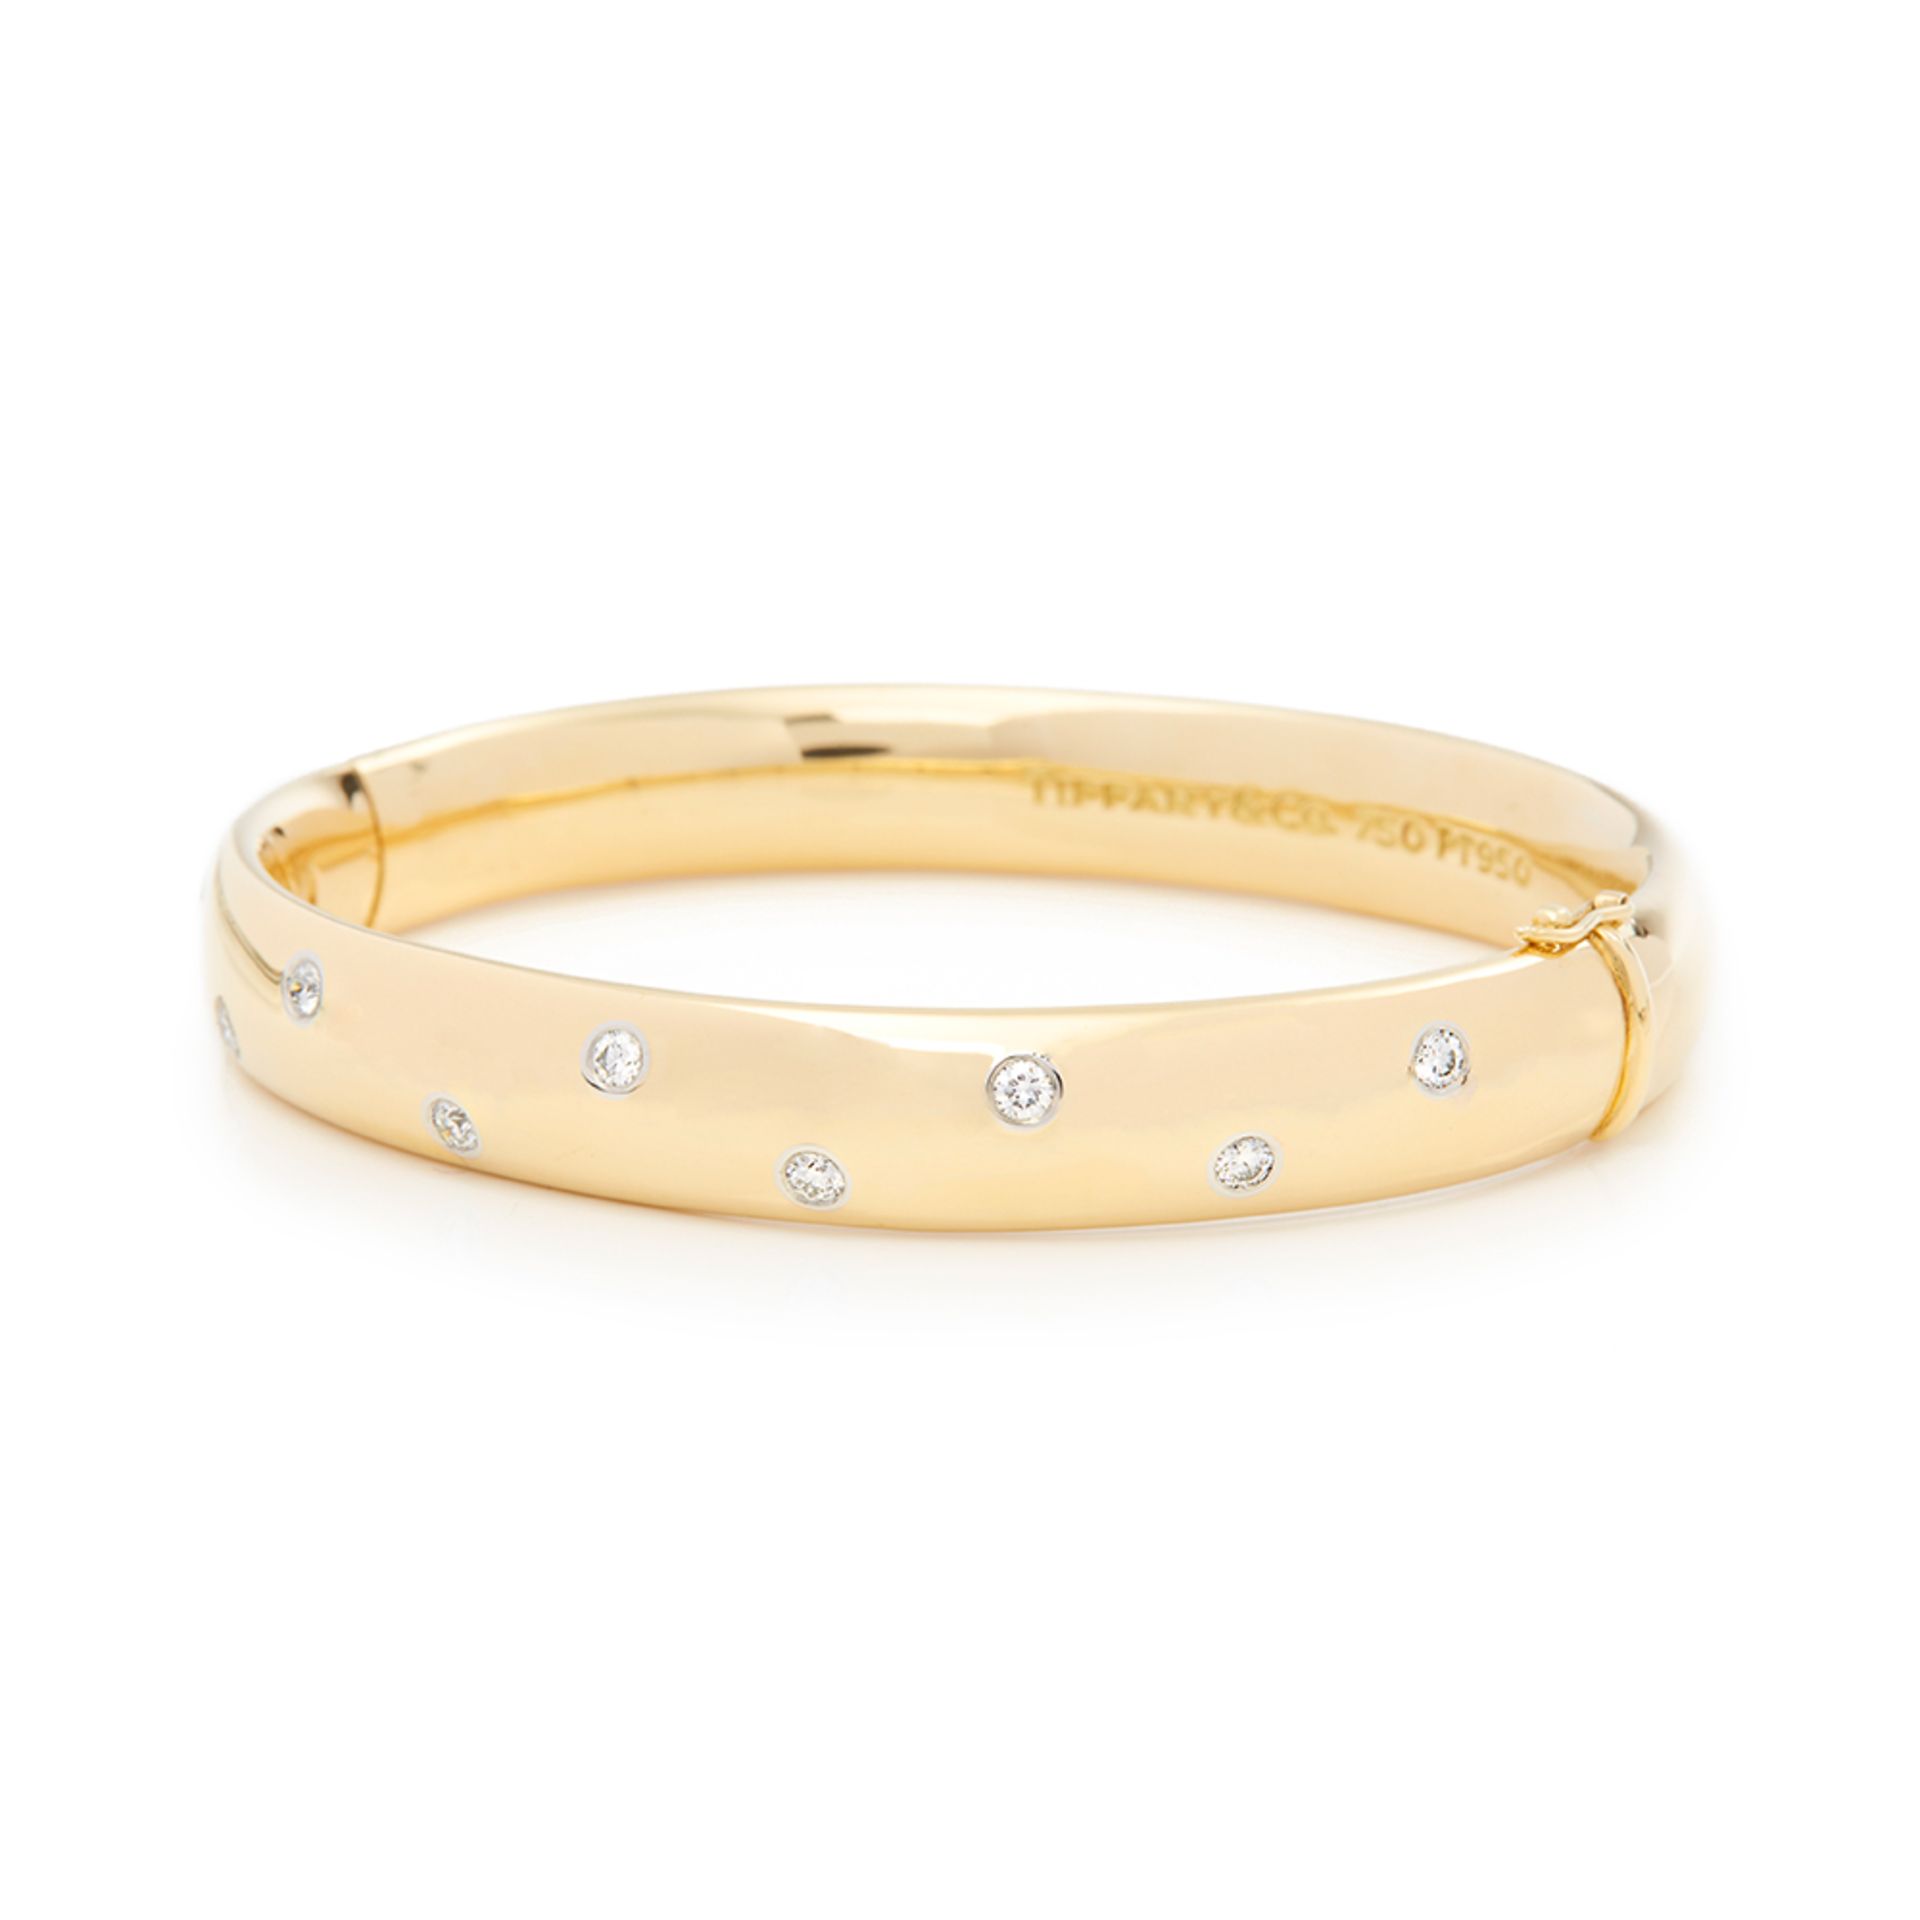 Tiffany & Co. 18k Yellow Gold Diamond Etoile Bracelet ***Reserve lowered*** - Image 6 of 9